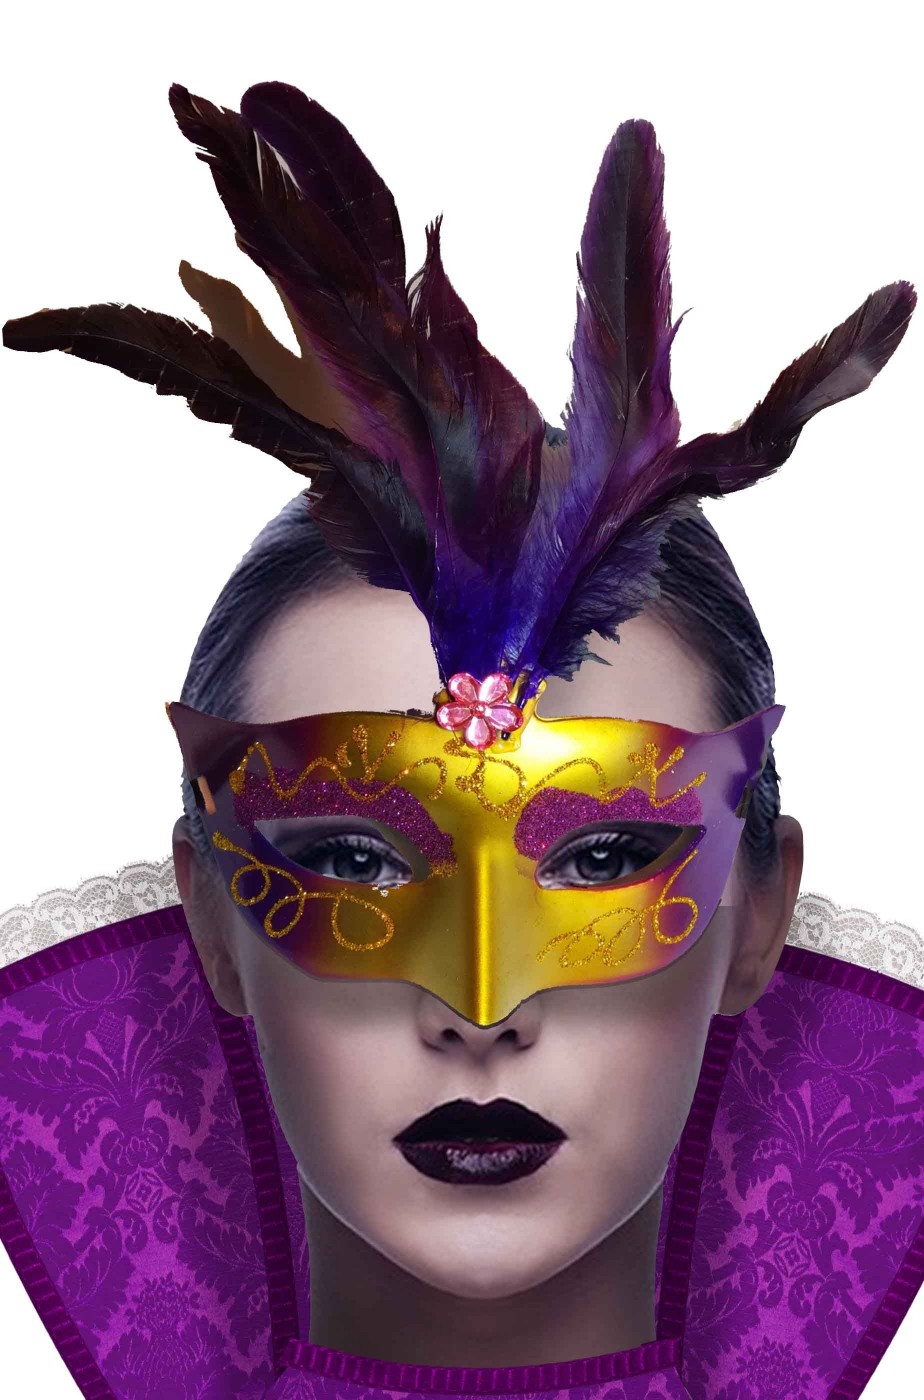 https://carnivalhalloween.com/21466-large_default/maschera-di-carnevale-stile-veneziano-viola-ed-oro-con-piume.jpg